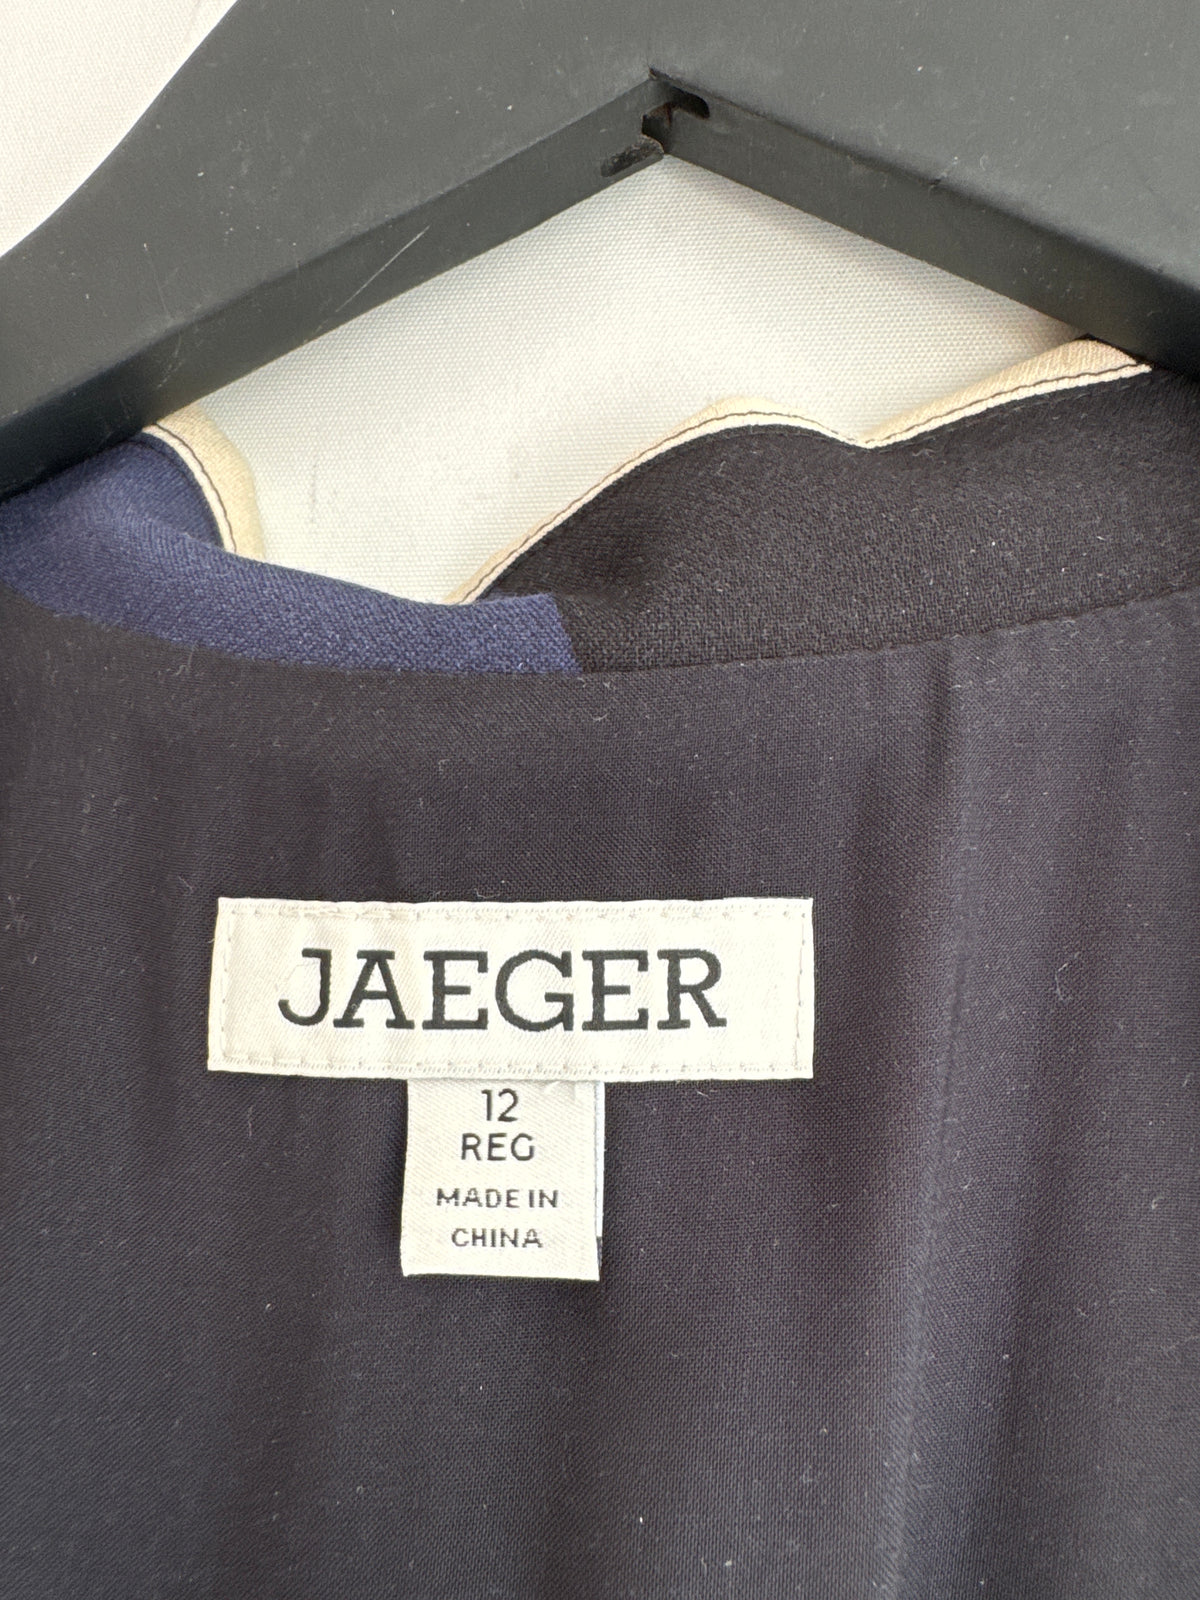 Jaeger print day dress Navy/Tan/Black Size 12 Reg